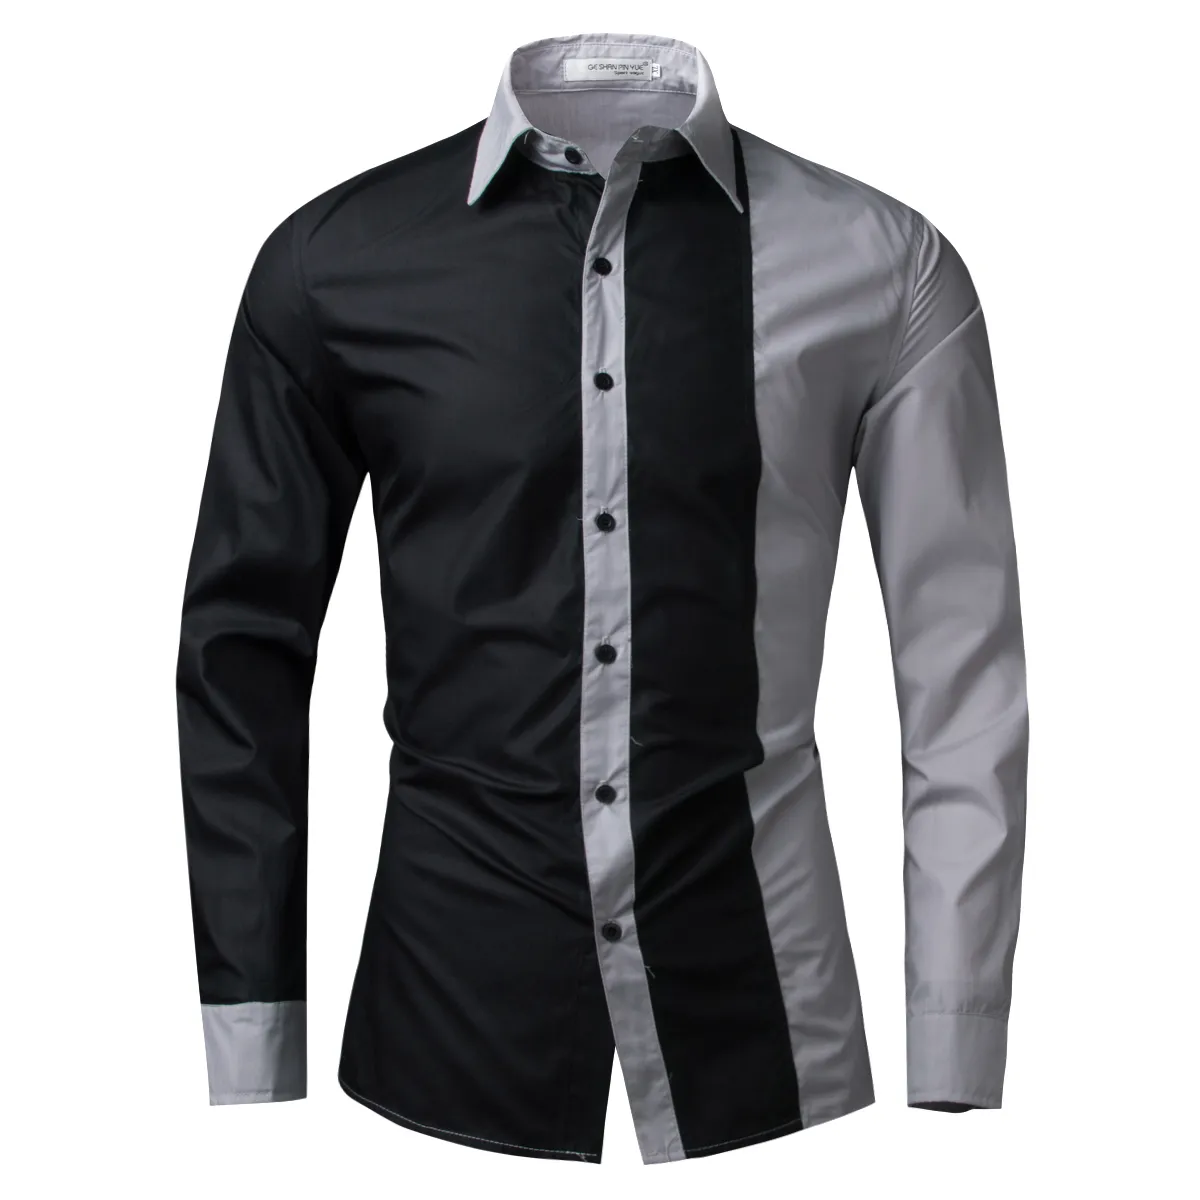 Tbird 2017 marca de moda camisa masculina preto branco vestido camisa manga longa fino ajuste masculino casual masculino havaiano shirts3362413